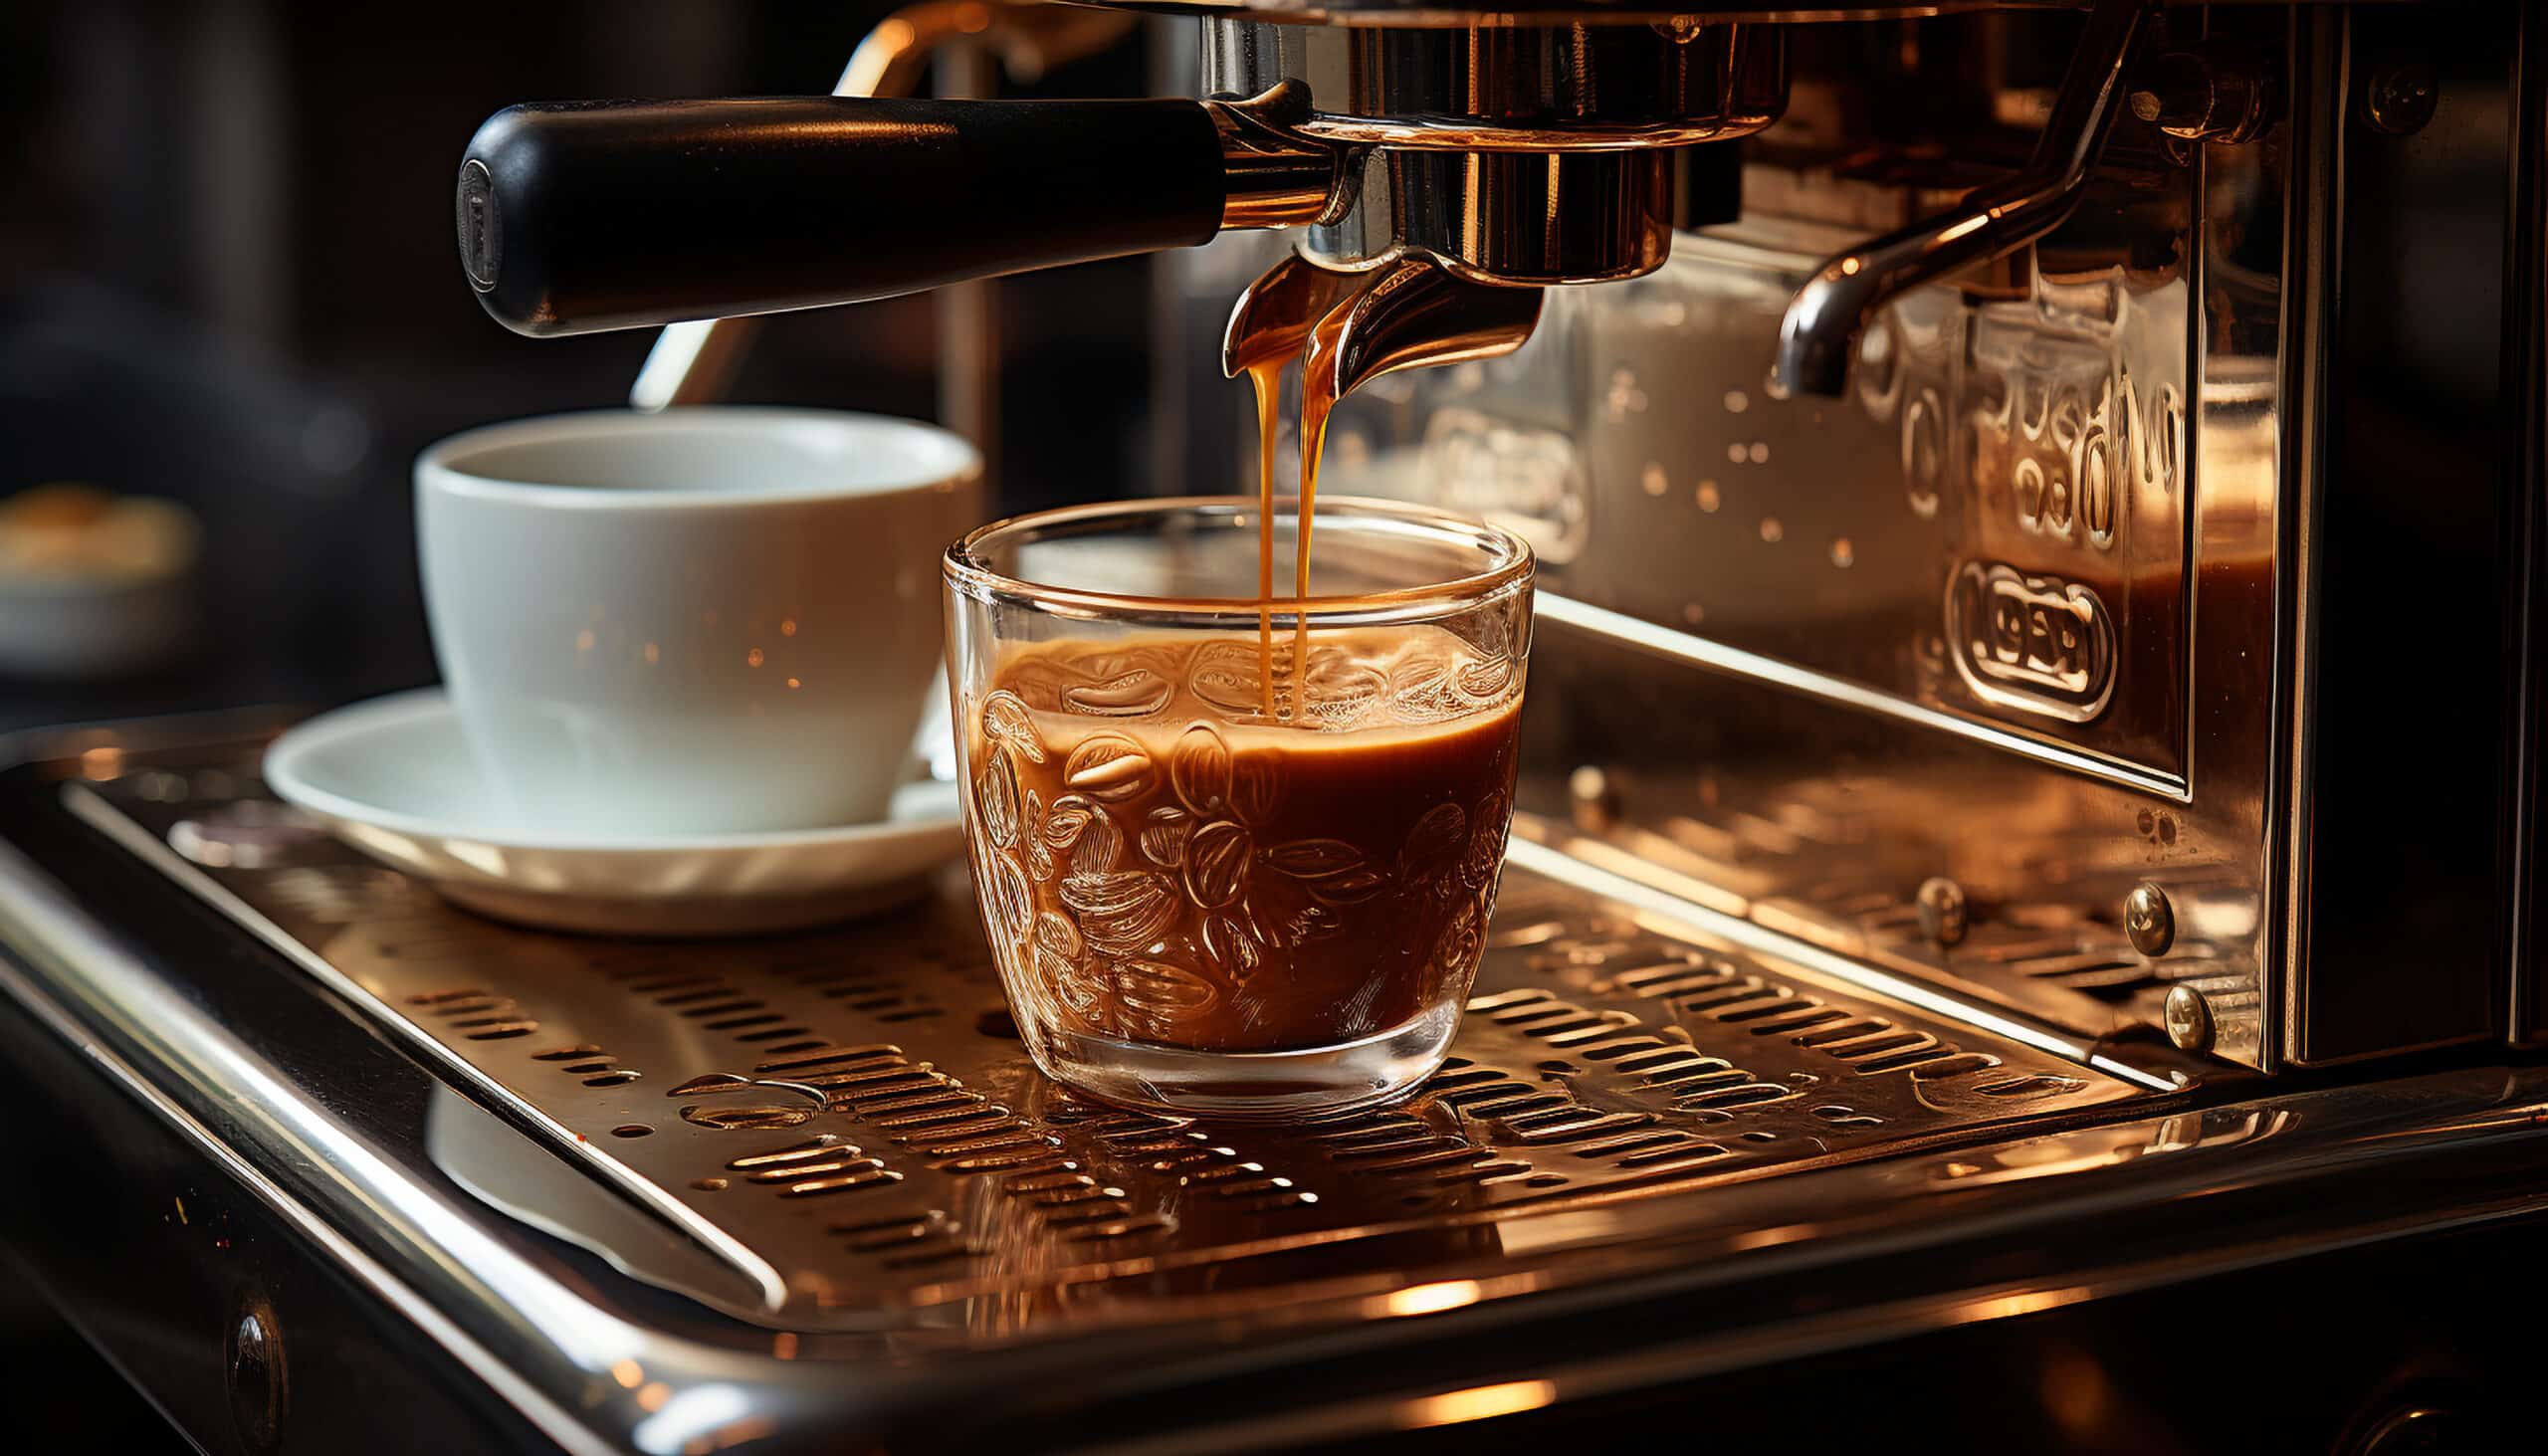 www.appr.com : How Does An Espresso Machine Work?